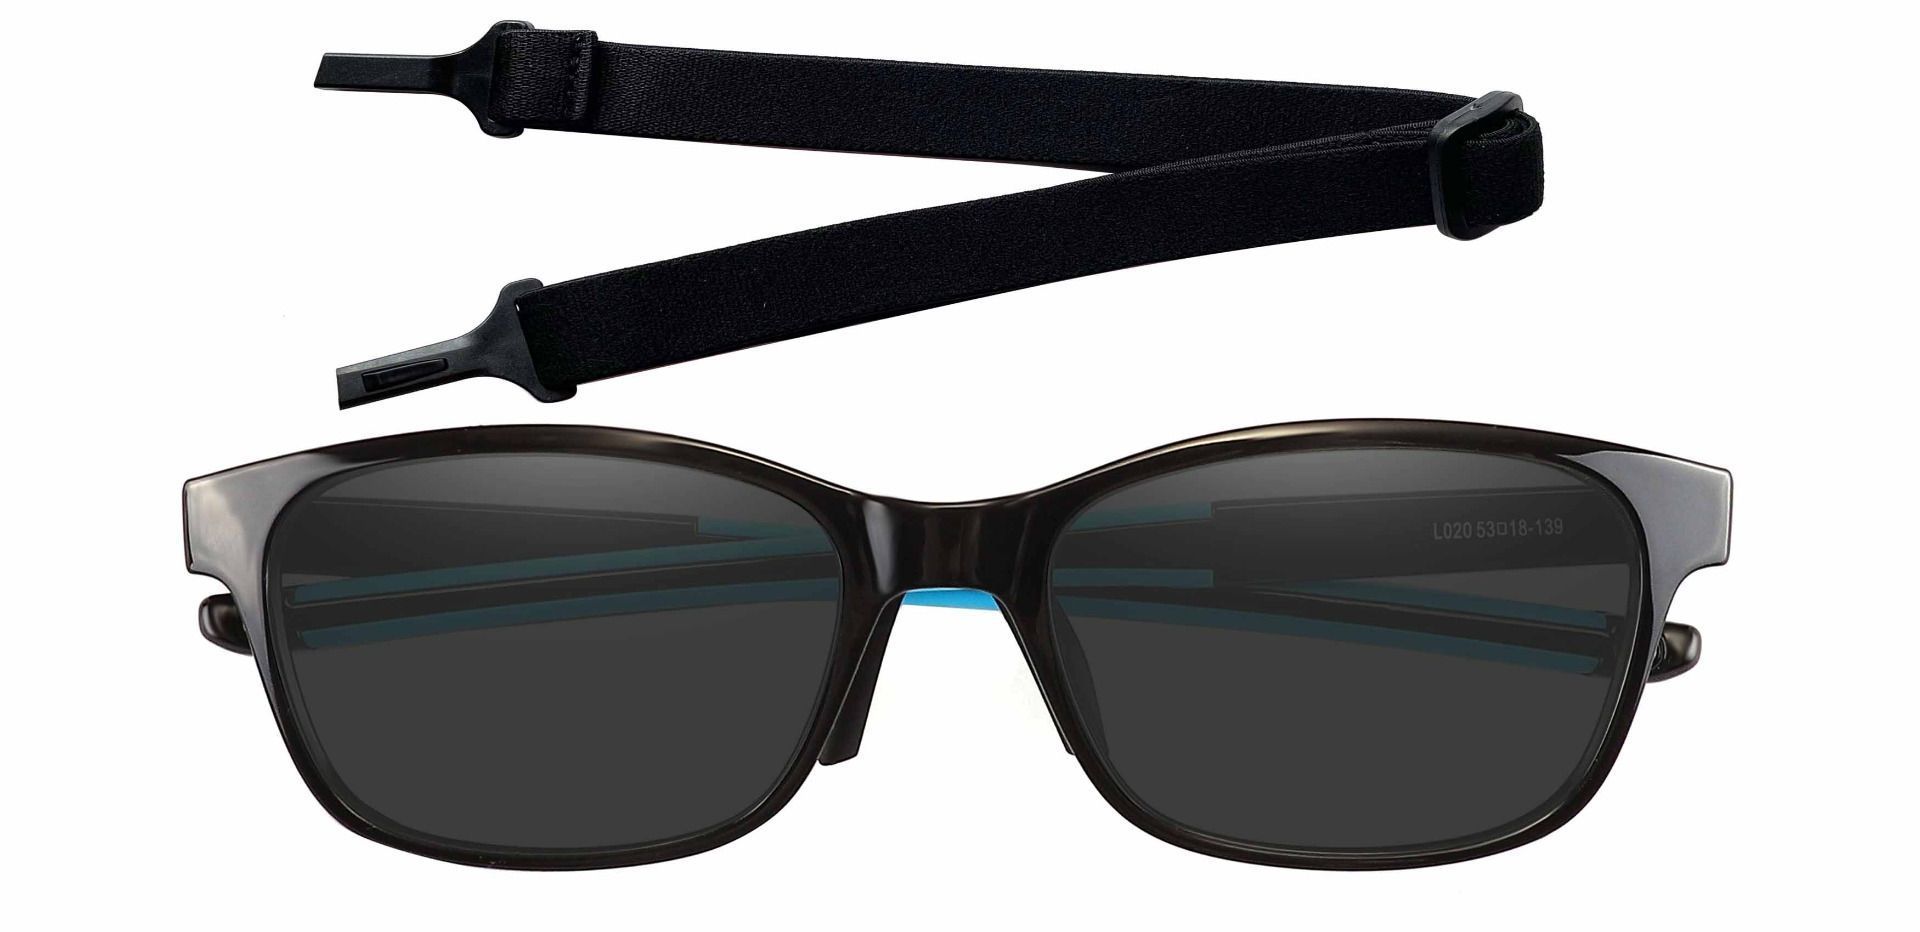 Higgins Rectangle Progressive Sunglasses - Black Frame With Gray Lenses